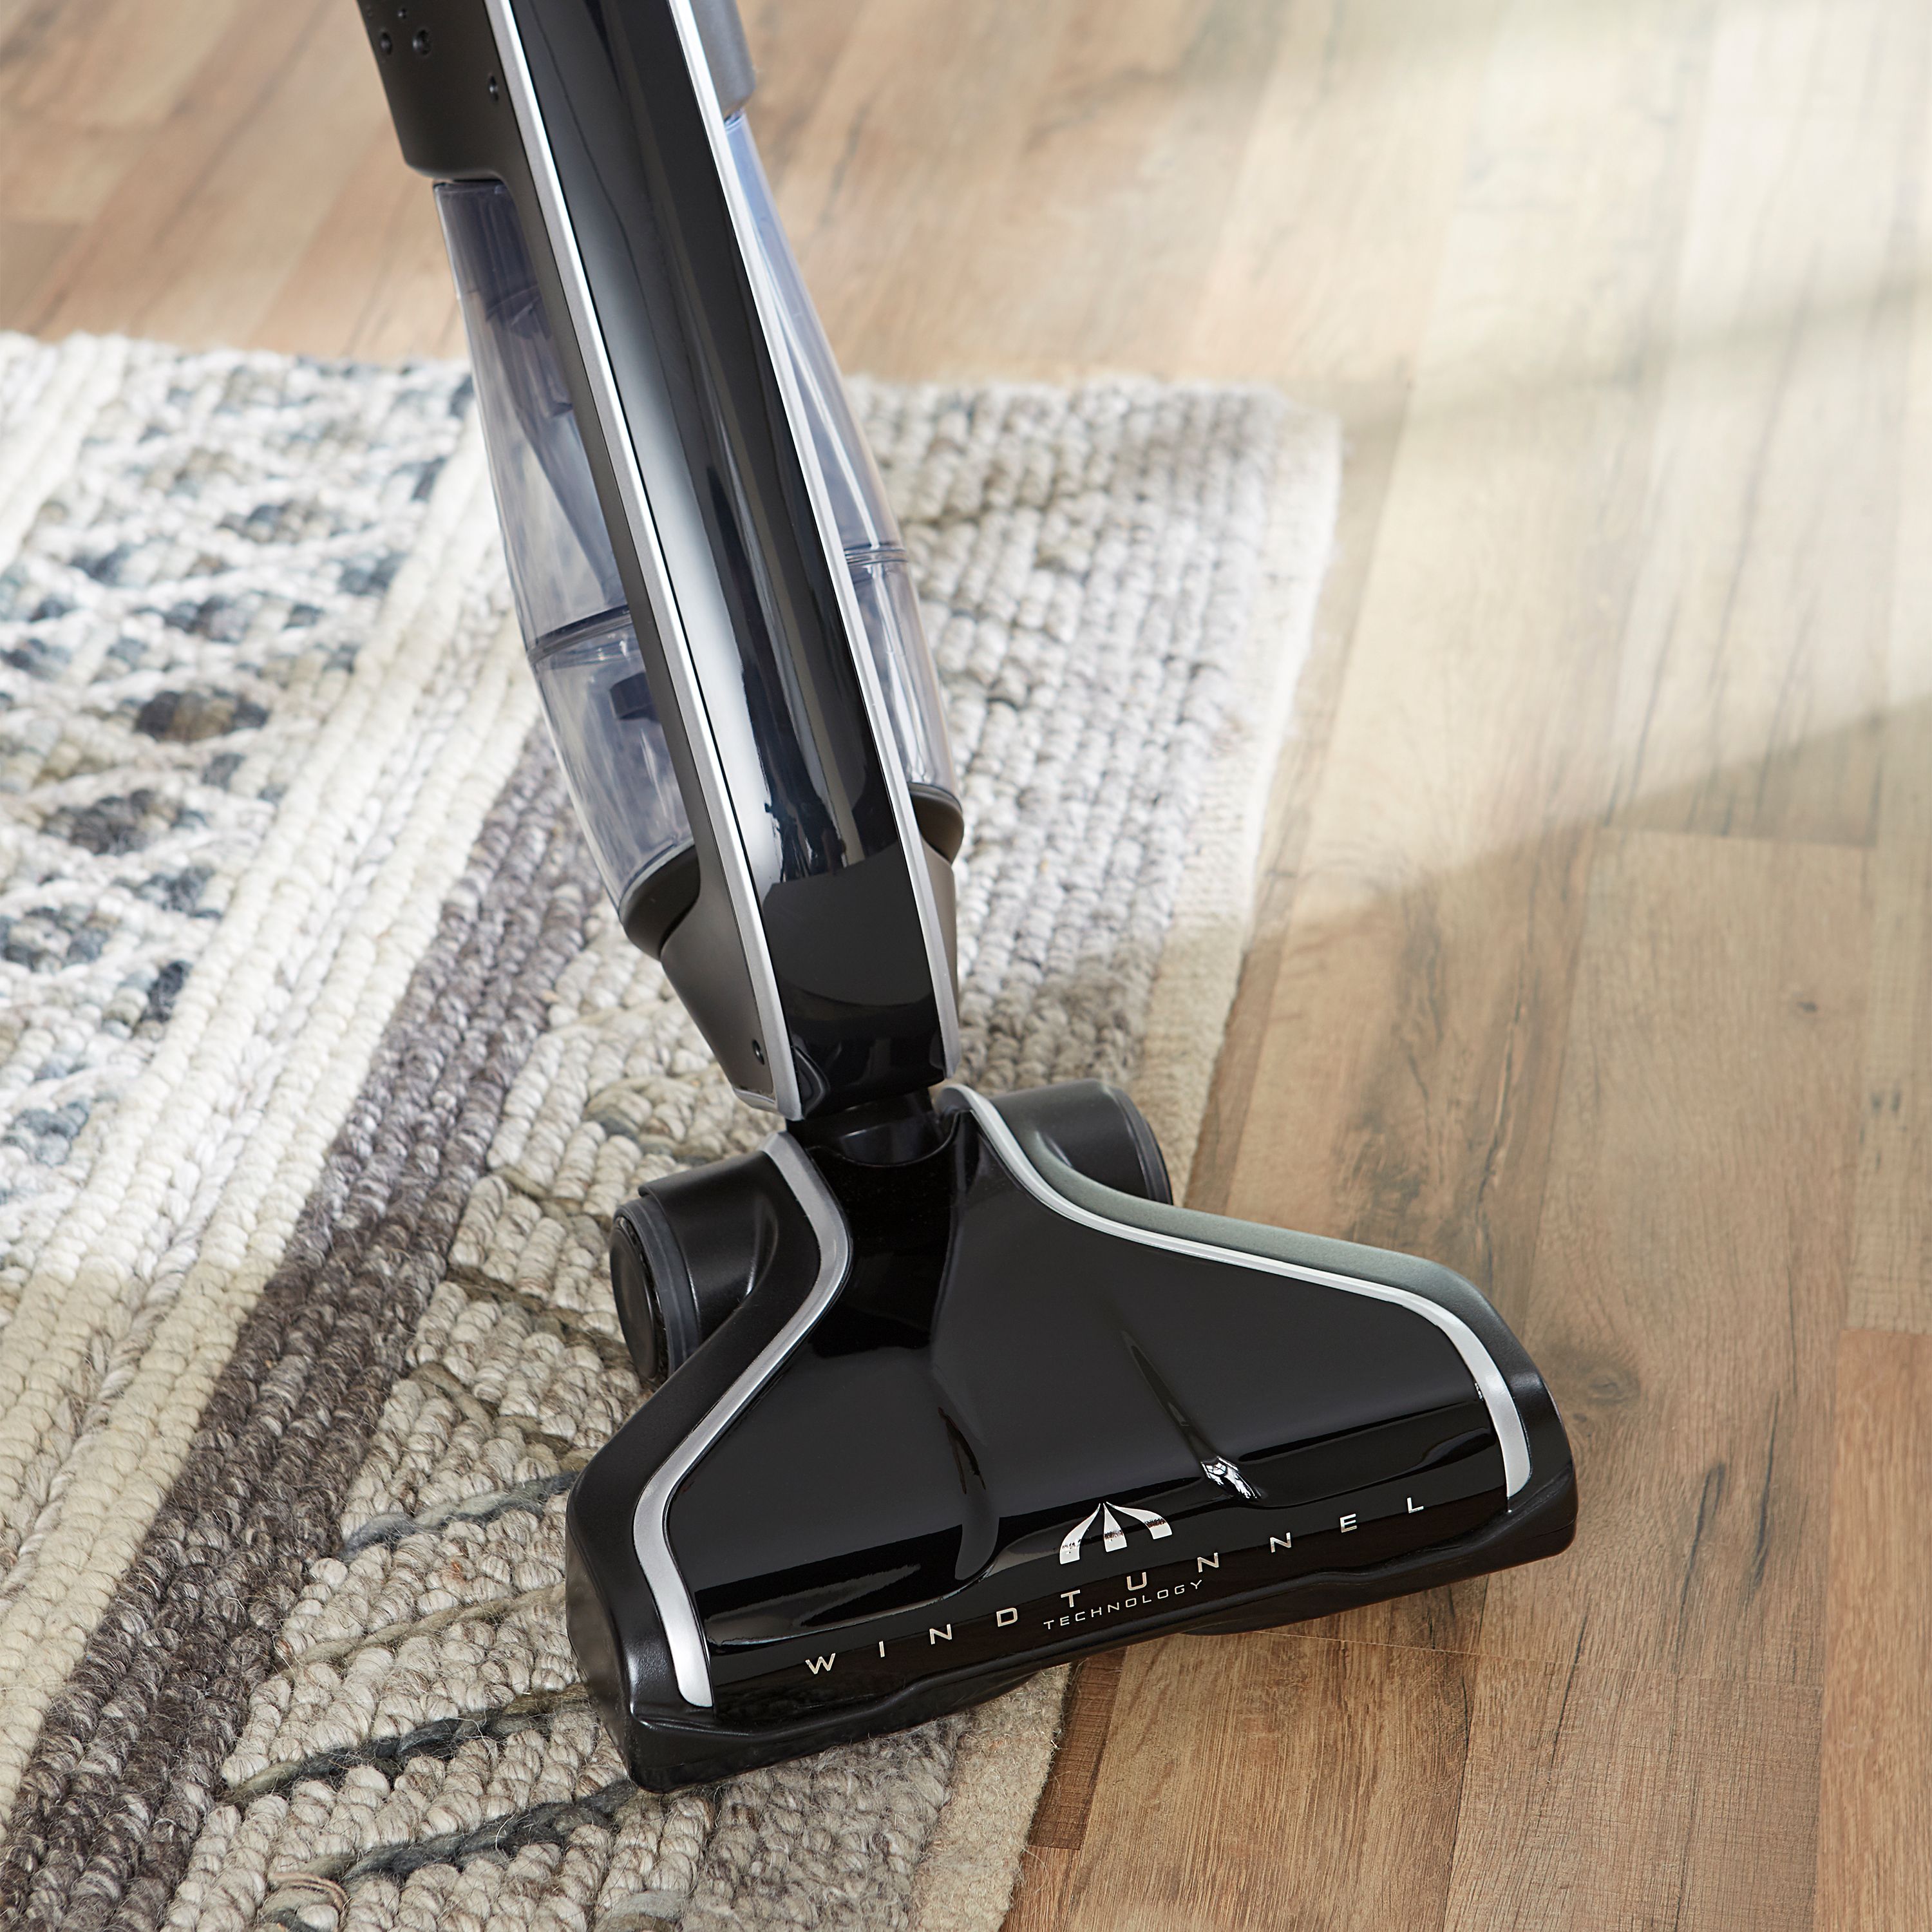 Hoover Linx Signature Lightweight Multi-Floor Cordless Stick Vacuum | BH50020 - image 4 of 7